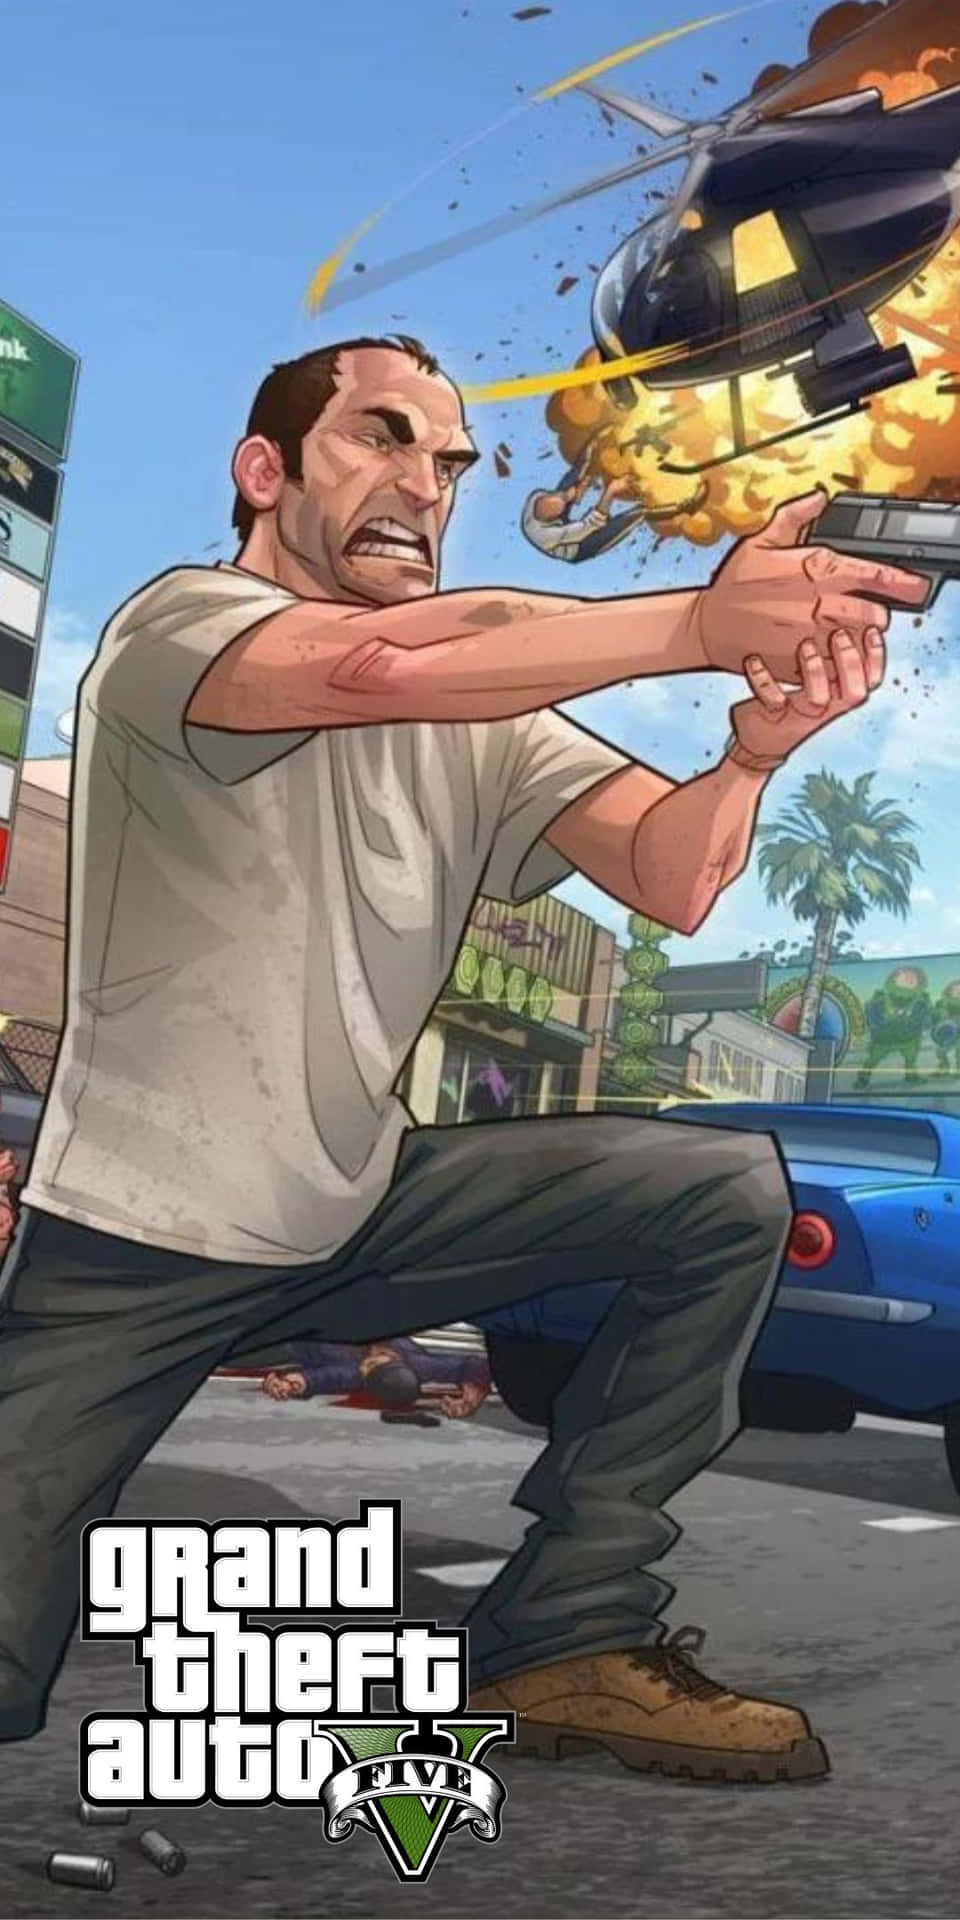 Pixel3 Bakgrundsbild Med Grand Theft Auto V.